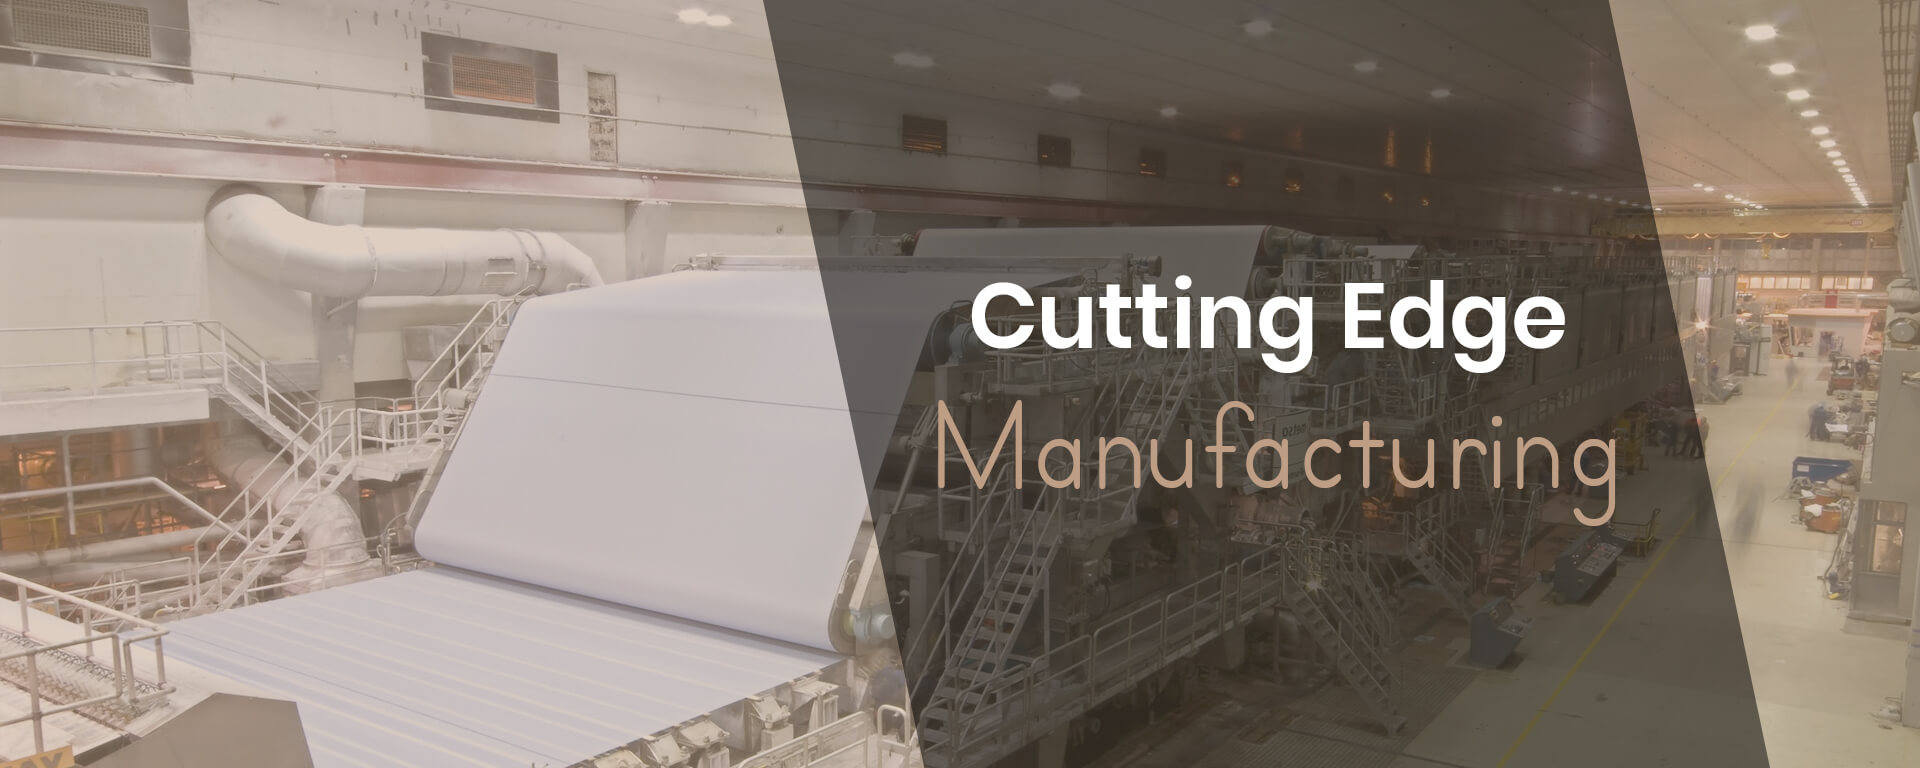 Cutting edge manufacturing